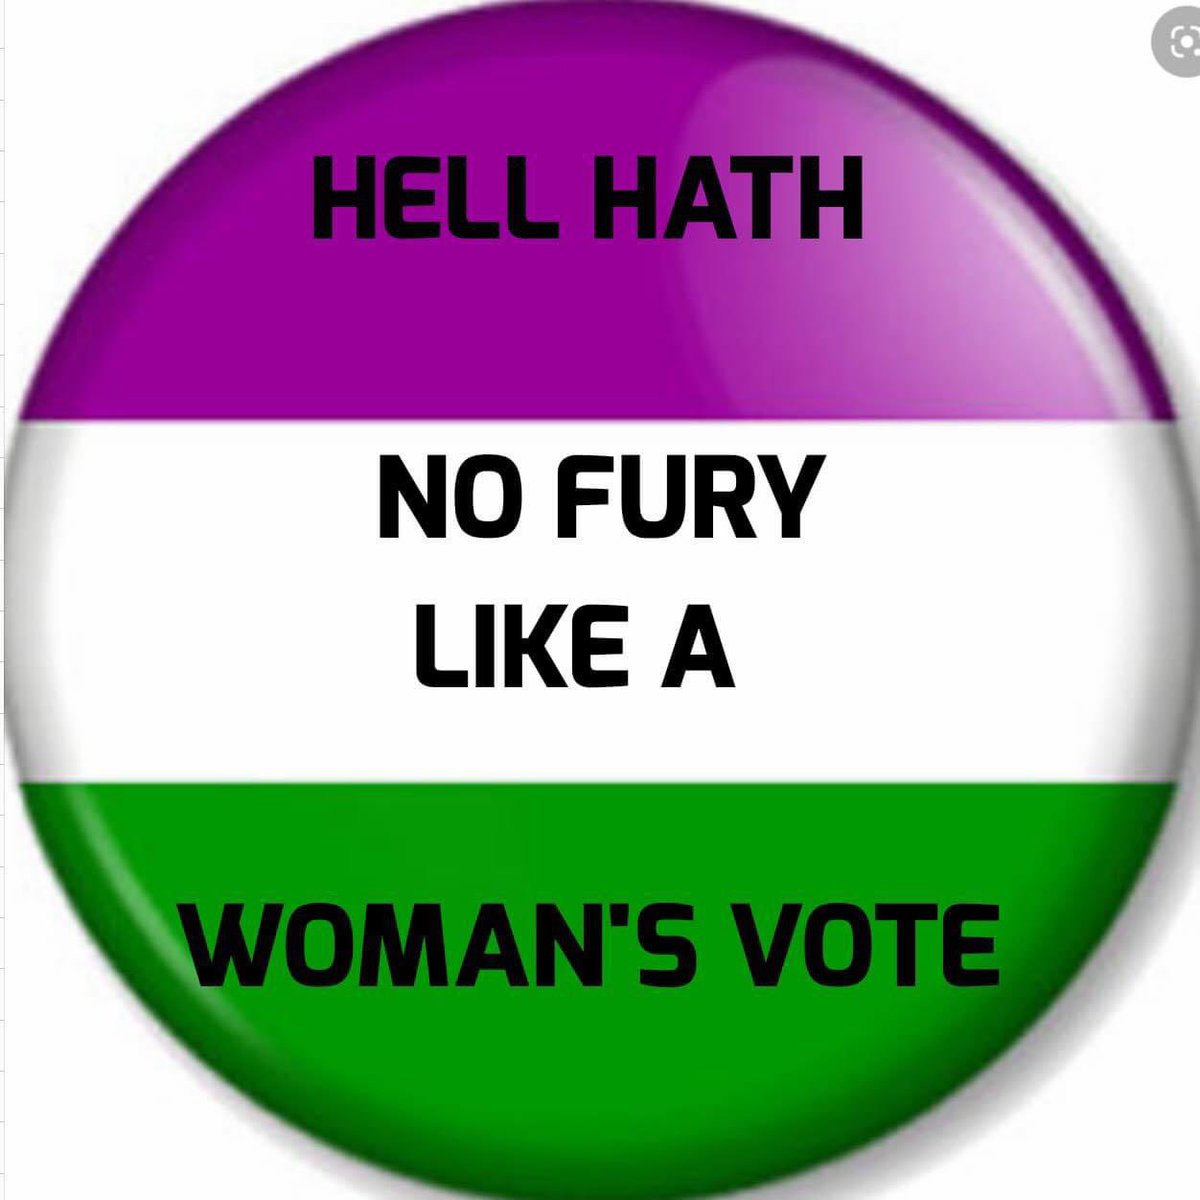 Party Leaders MUST commit to #50swomen - 3.6 million votes can ensure change happens. @Plaid_Cymru @UKLabour @theSNP @LibDems @Conservatives @TheGreenParty